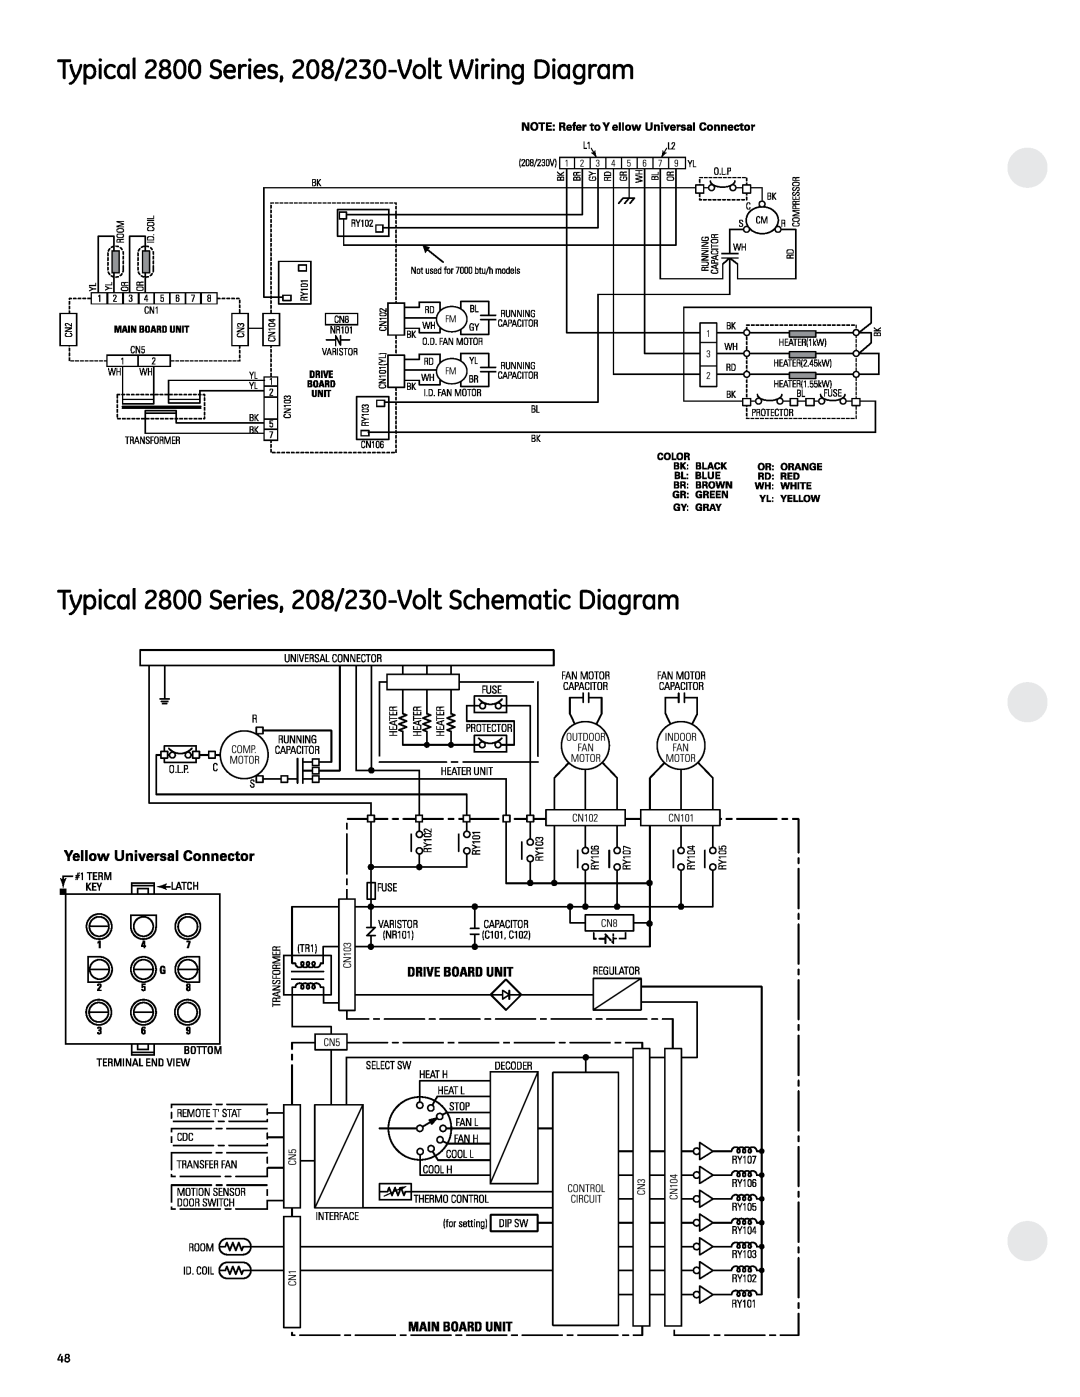 GE manual Typical 2800 Series, 208/230-VoltWiring Diagram 